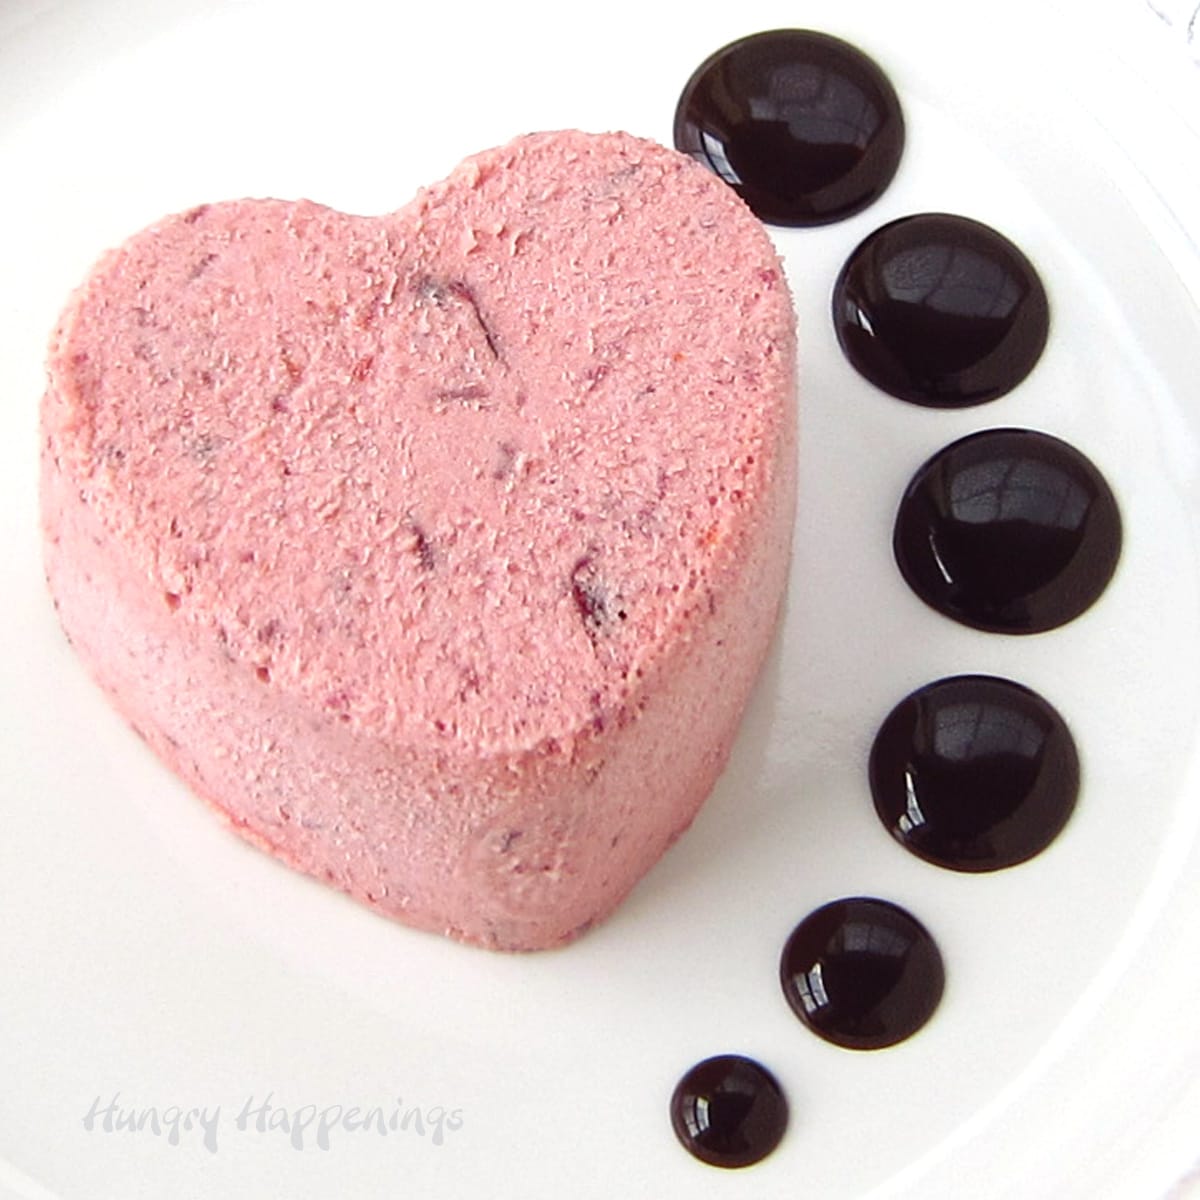 cranberry orange semi-freddo hearts with chocolate ganache dots